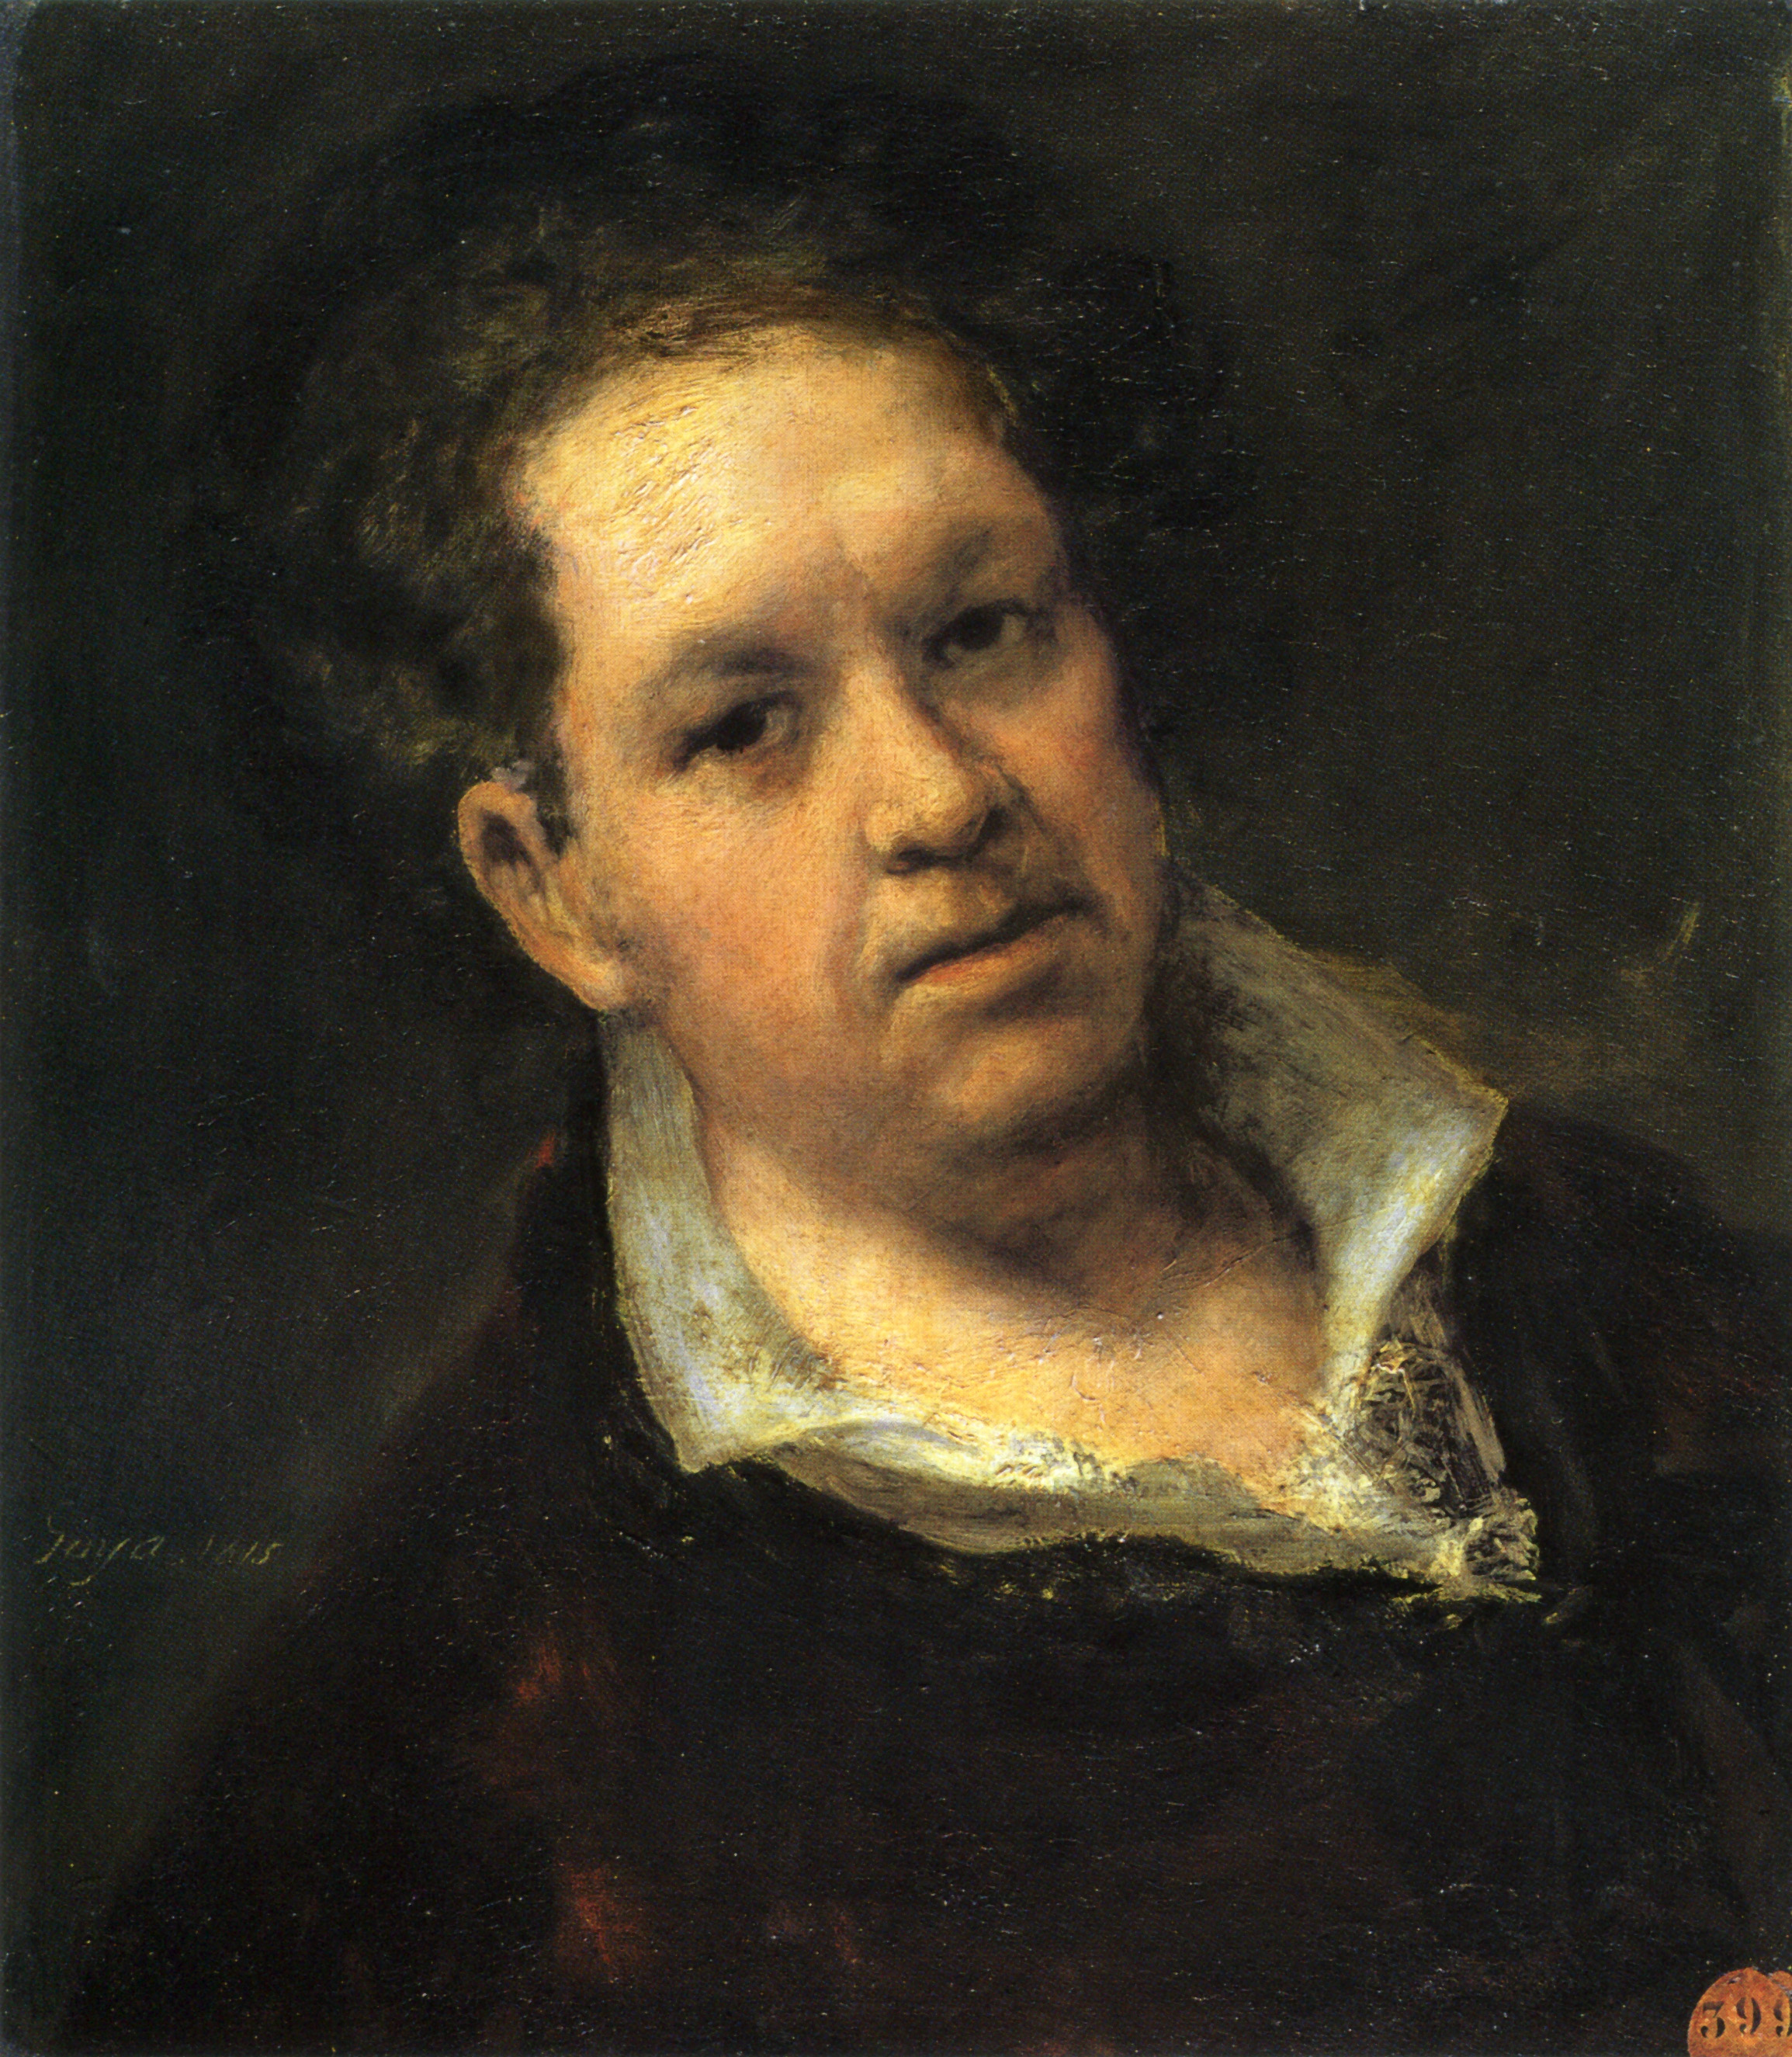 File:Self-portrait at 69 Years by Francisco de Goya.jpg